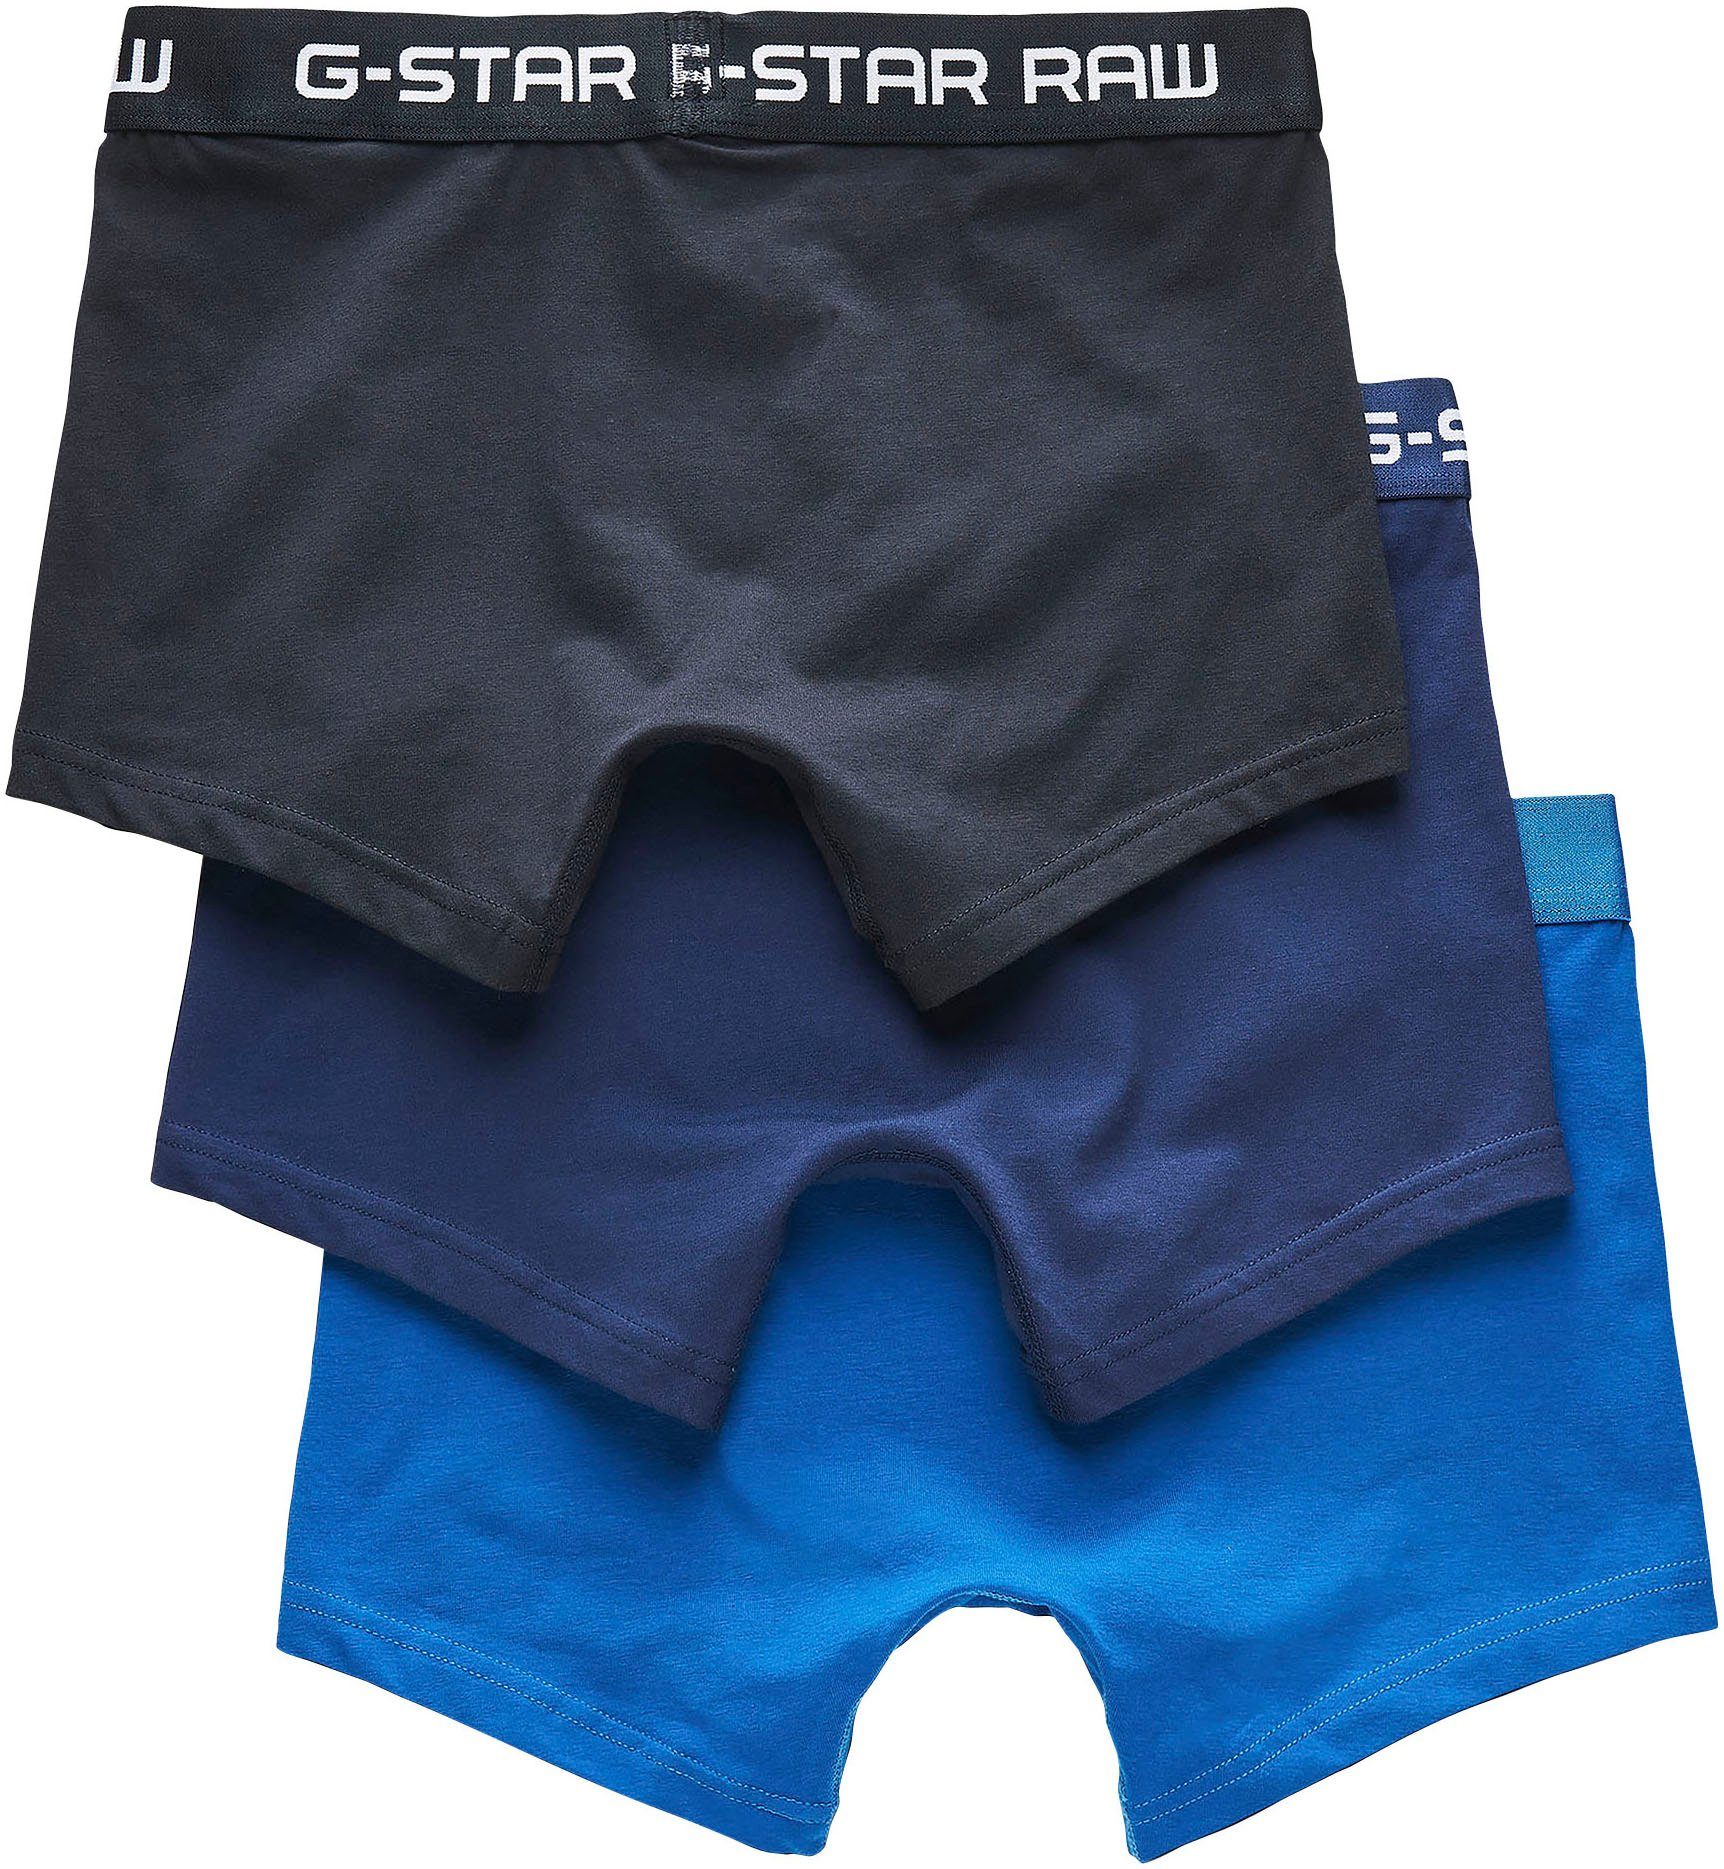 G-Star RAW Boxer Classic trunk clr 3 pack (Packung, 3-St., 3er-Pack) aquablau, blau, marine